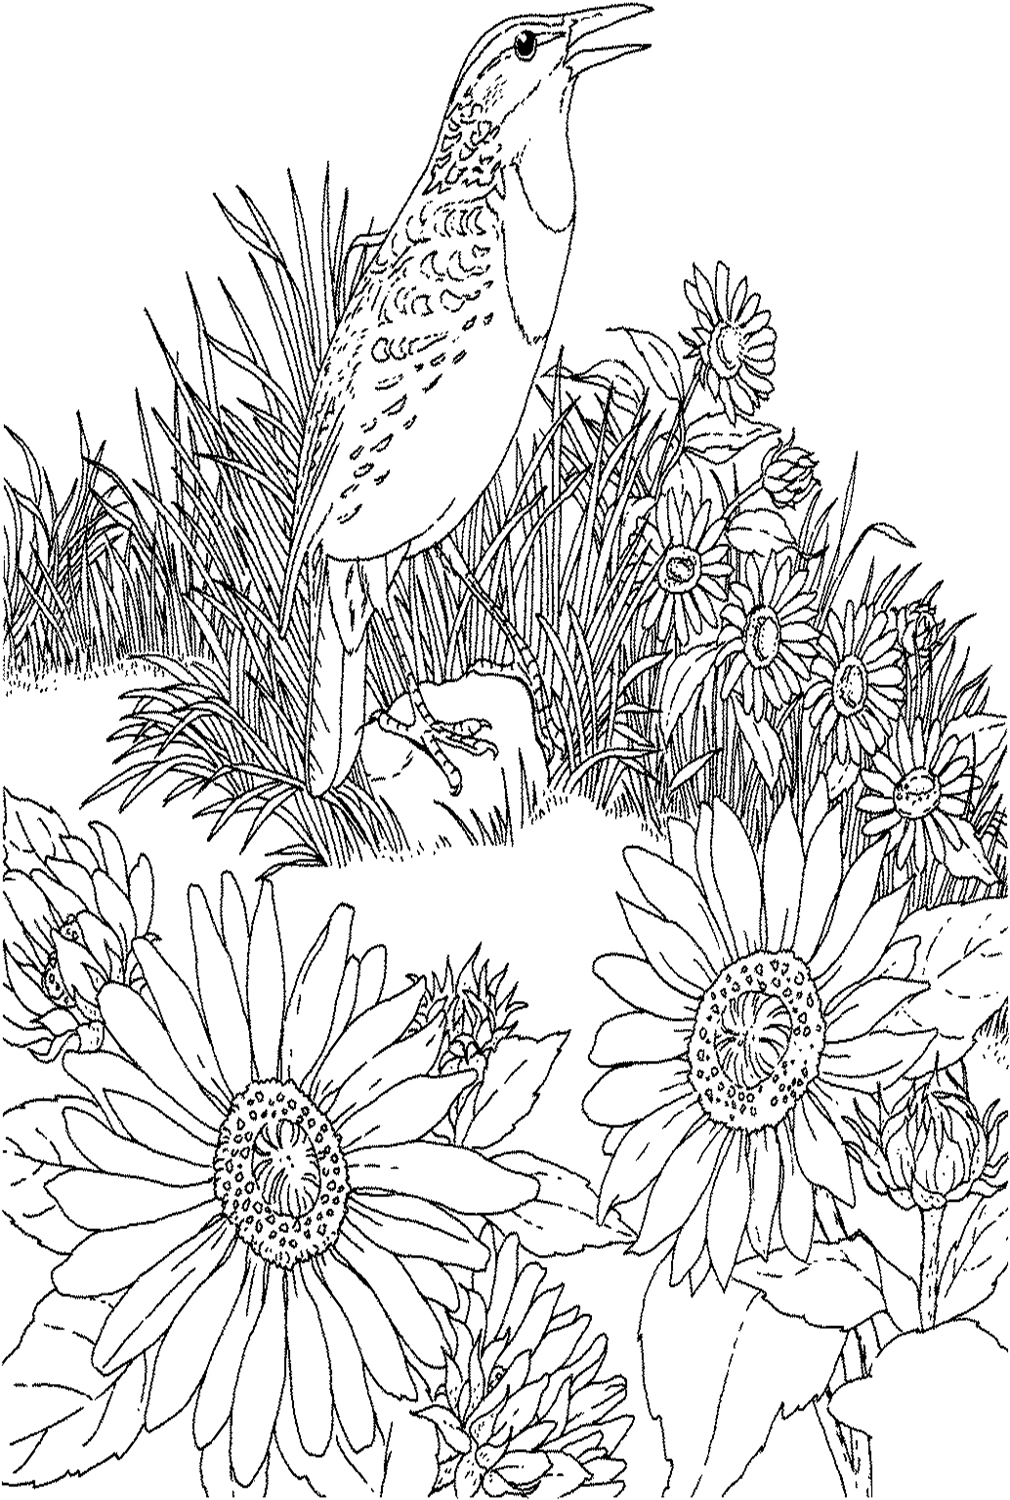 Meadowlark and Wild Sunflower Kansas State Bird and Flower from Sunflower